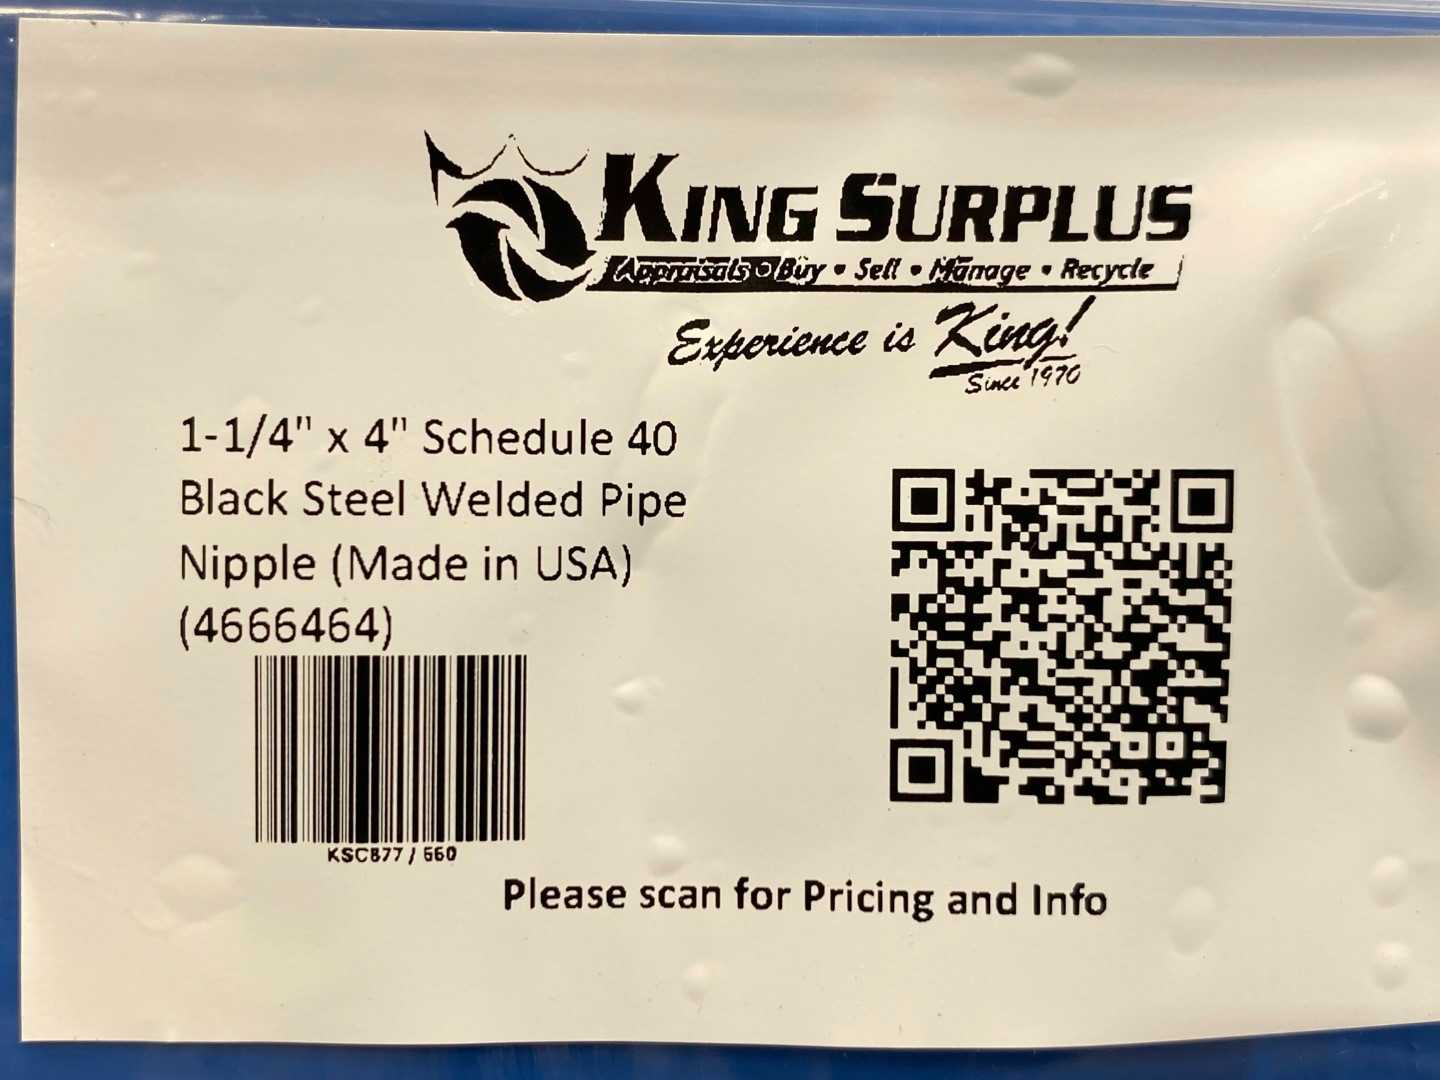 1-1/4" x 4" Schedule 40 Black Steel Welded Pipe Nipple (Made in USA) (4666464)